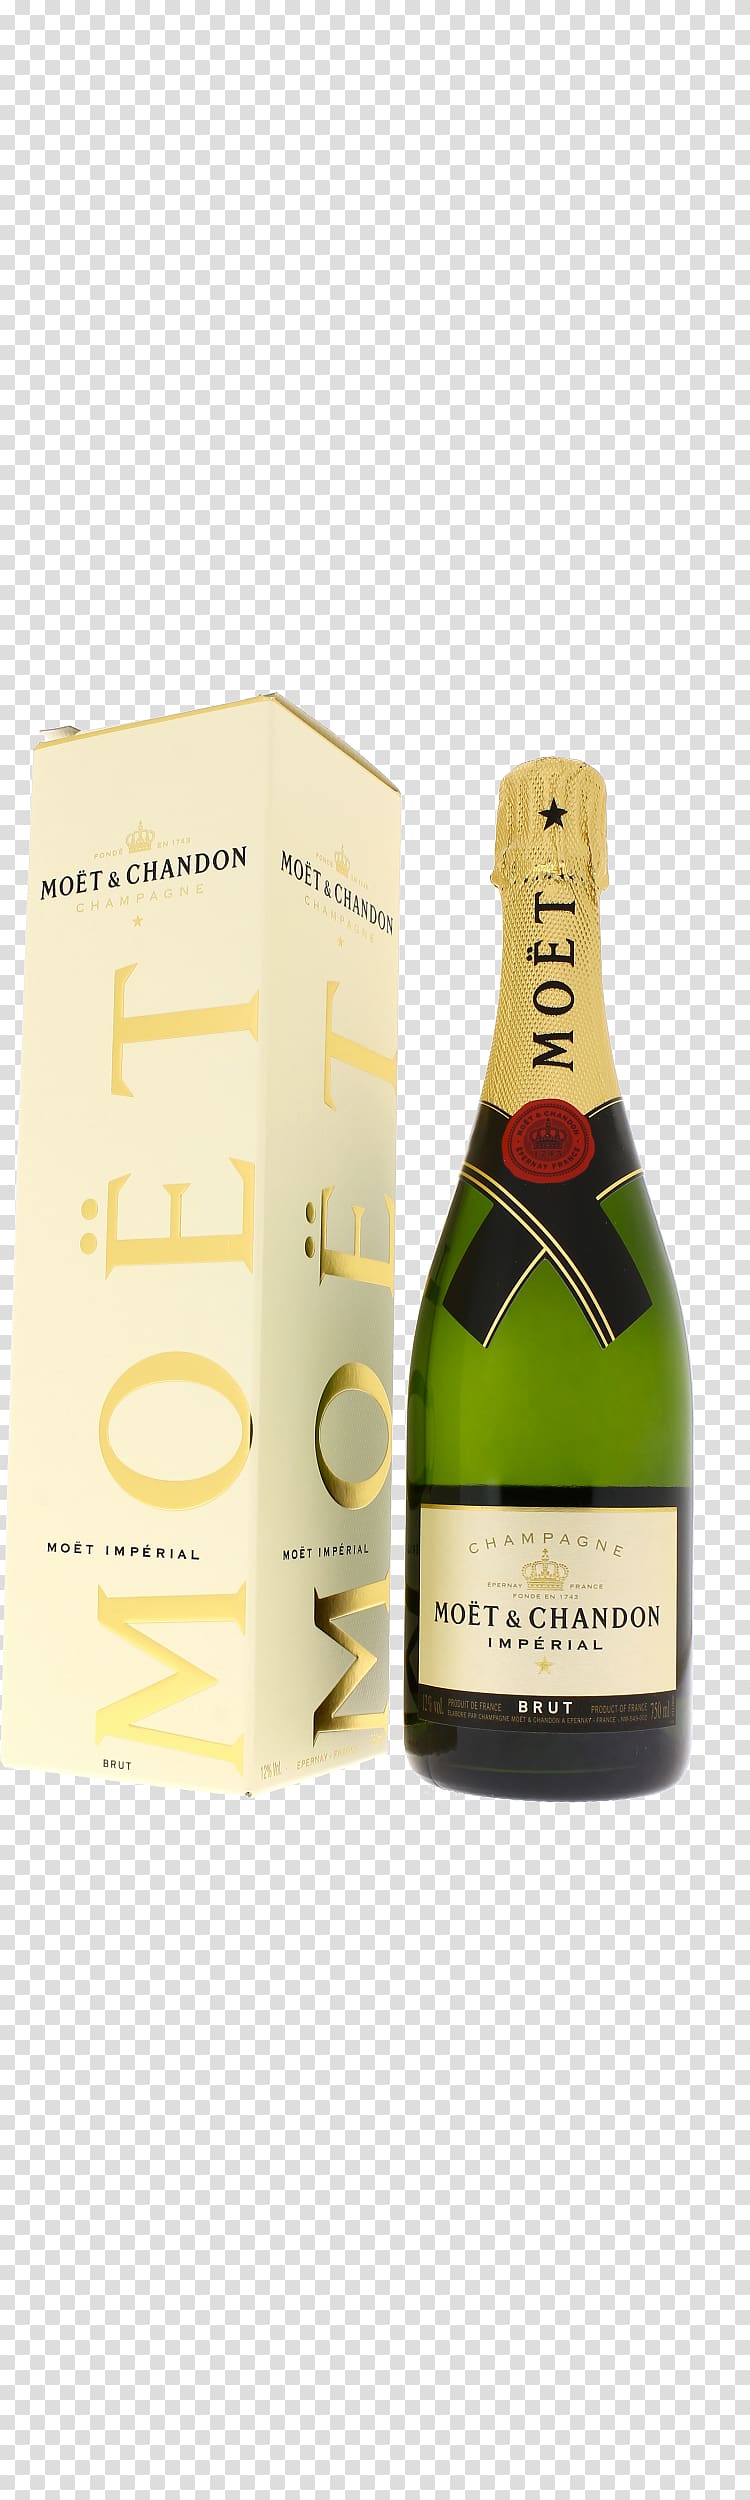 Champagne Moet Chandon Imperial Moët & Chandon Moet & Chandon Imperial Brut Bottle, champagne transparent background PNG clipart